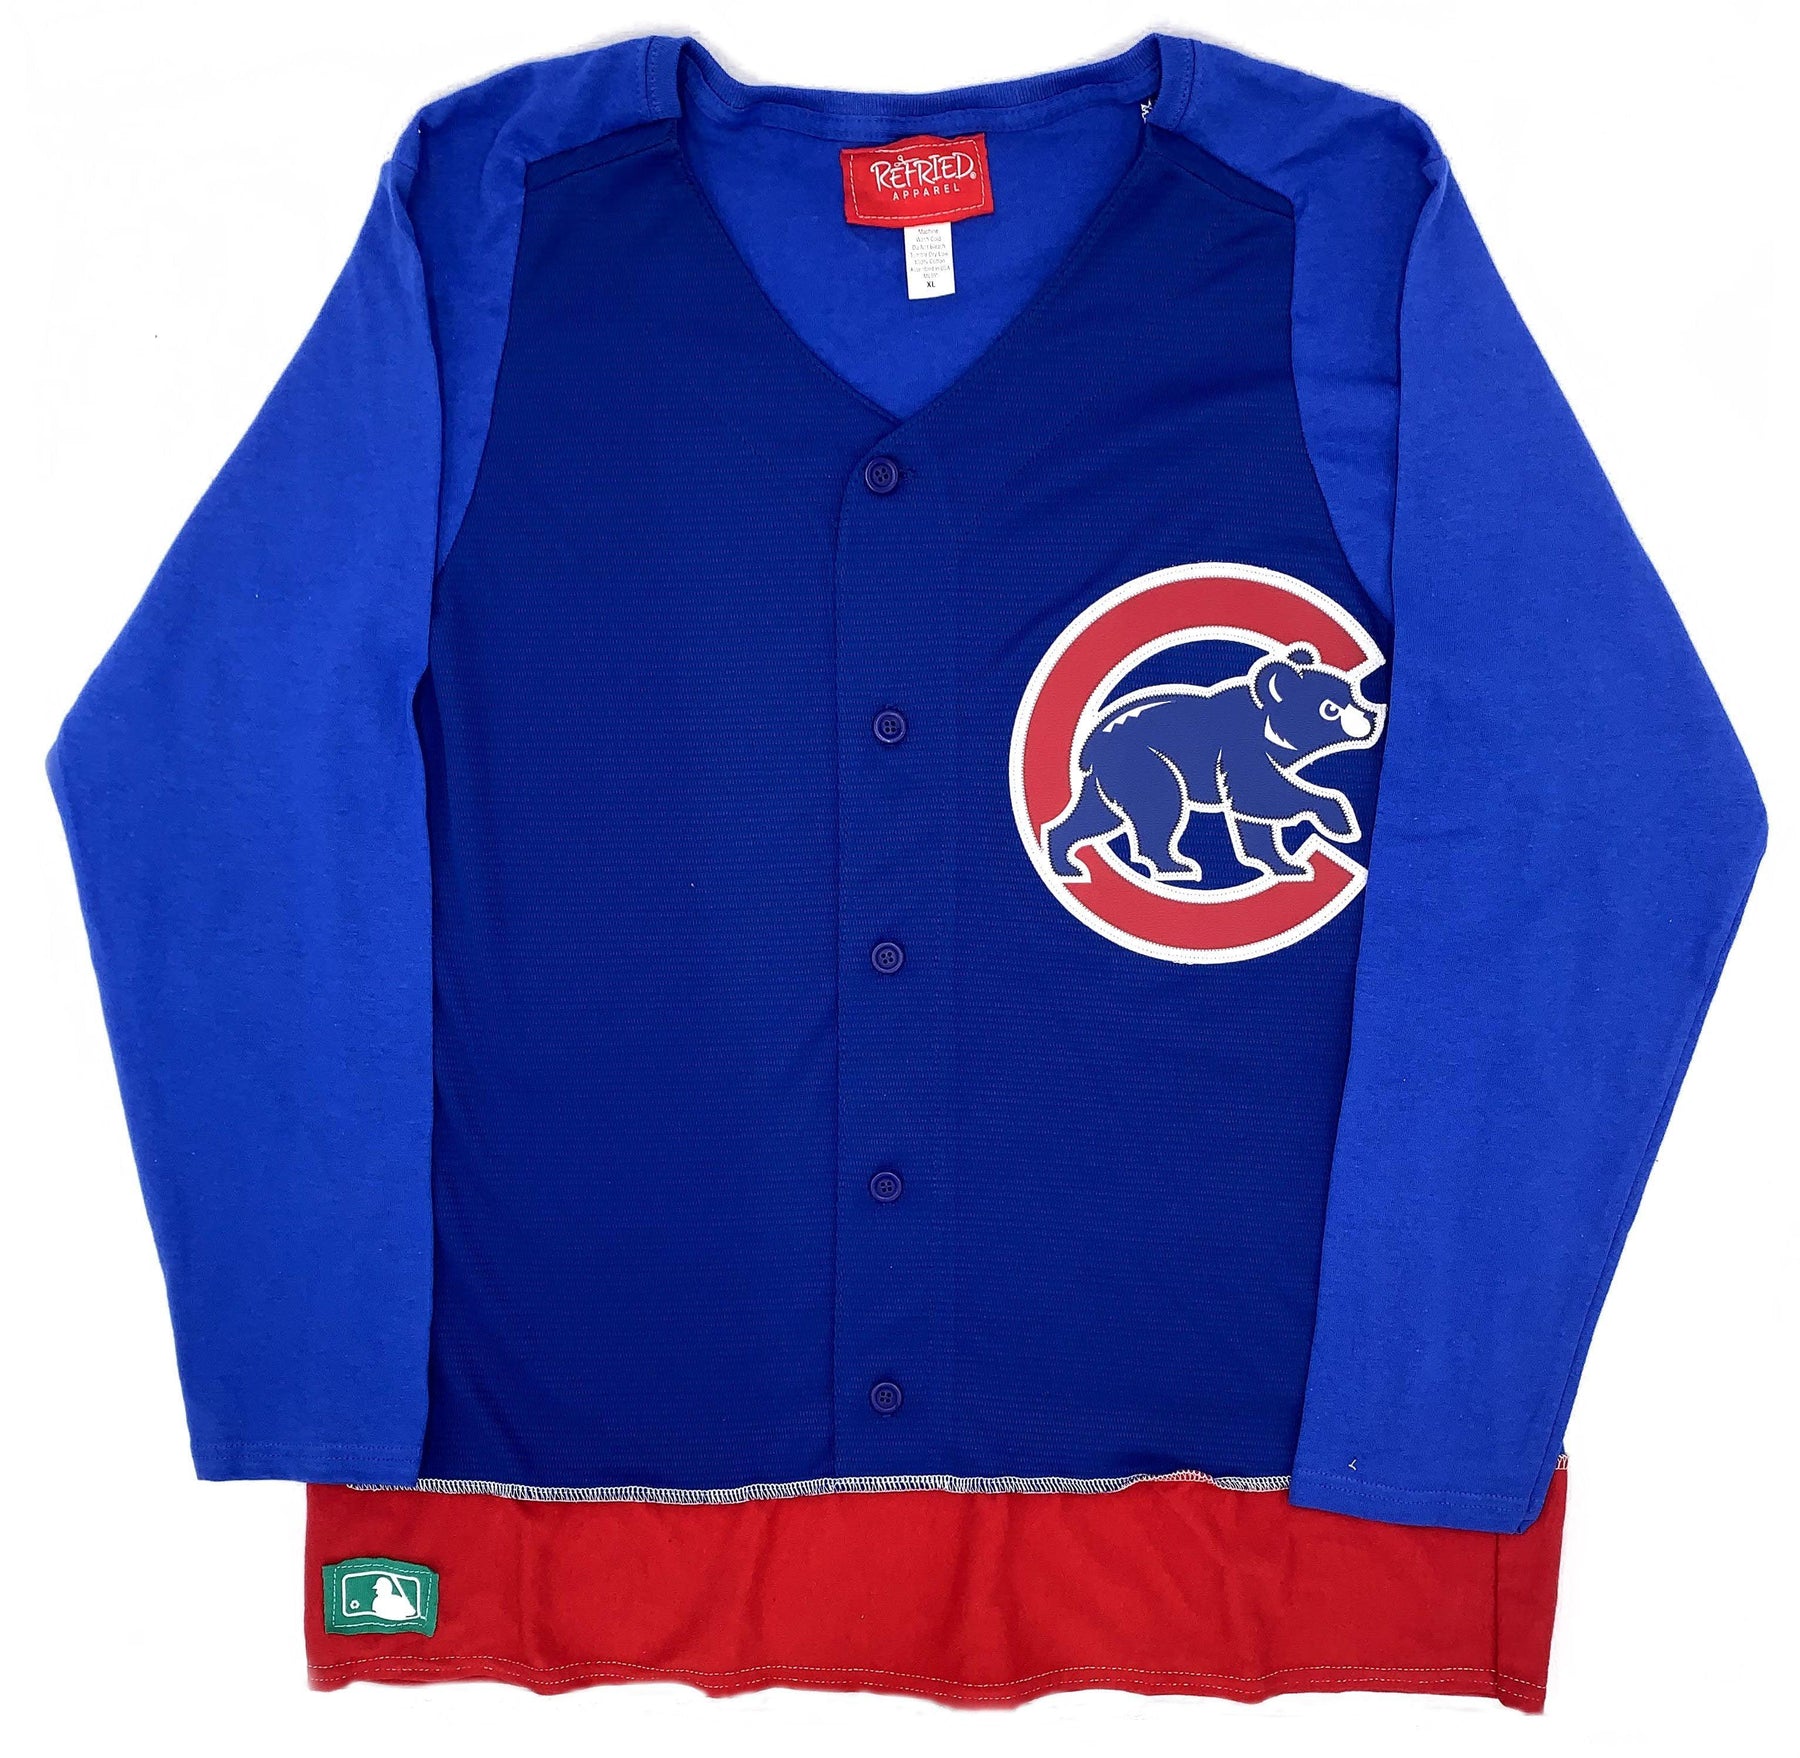 Chicago Cubs Boys Majestic MLB Baseball jersey Alternate Royal